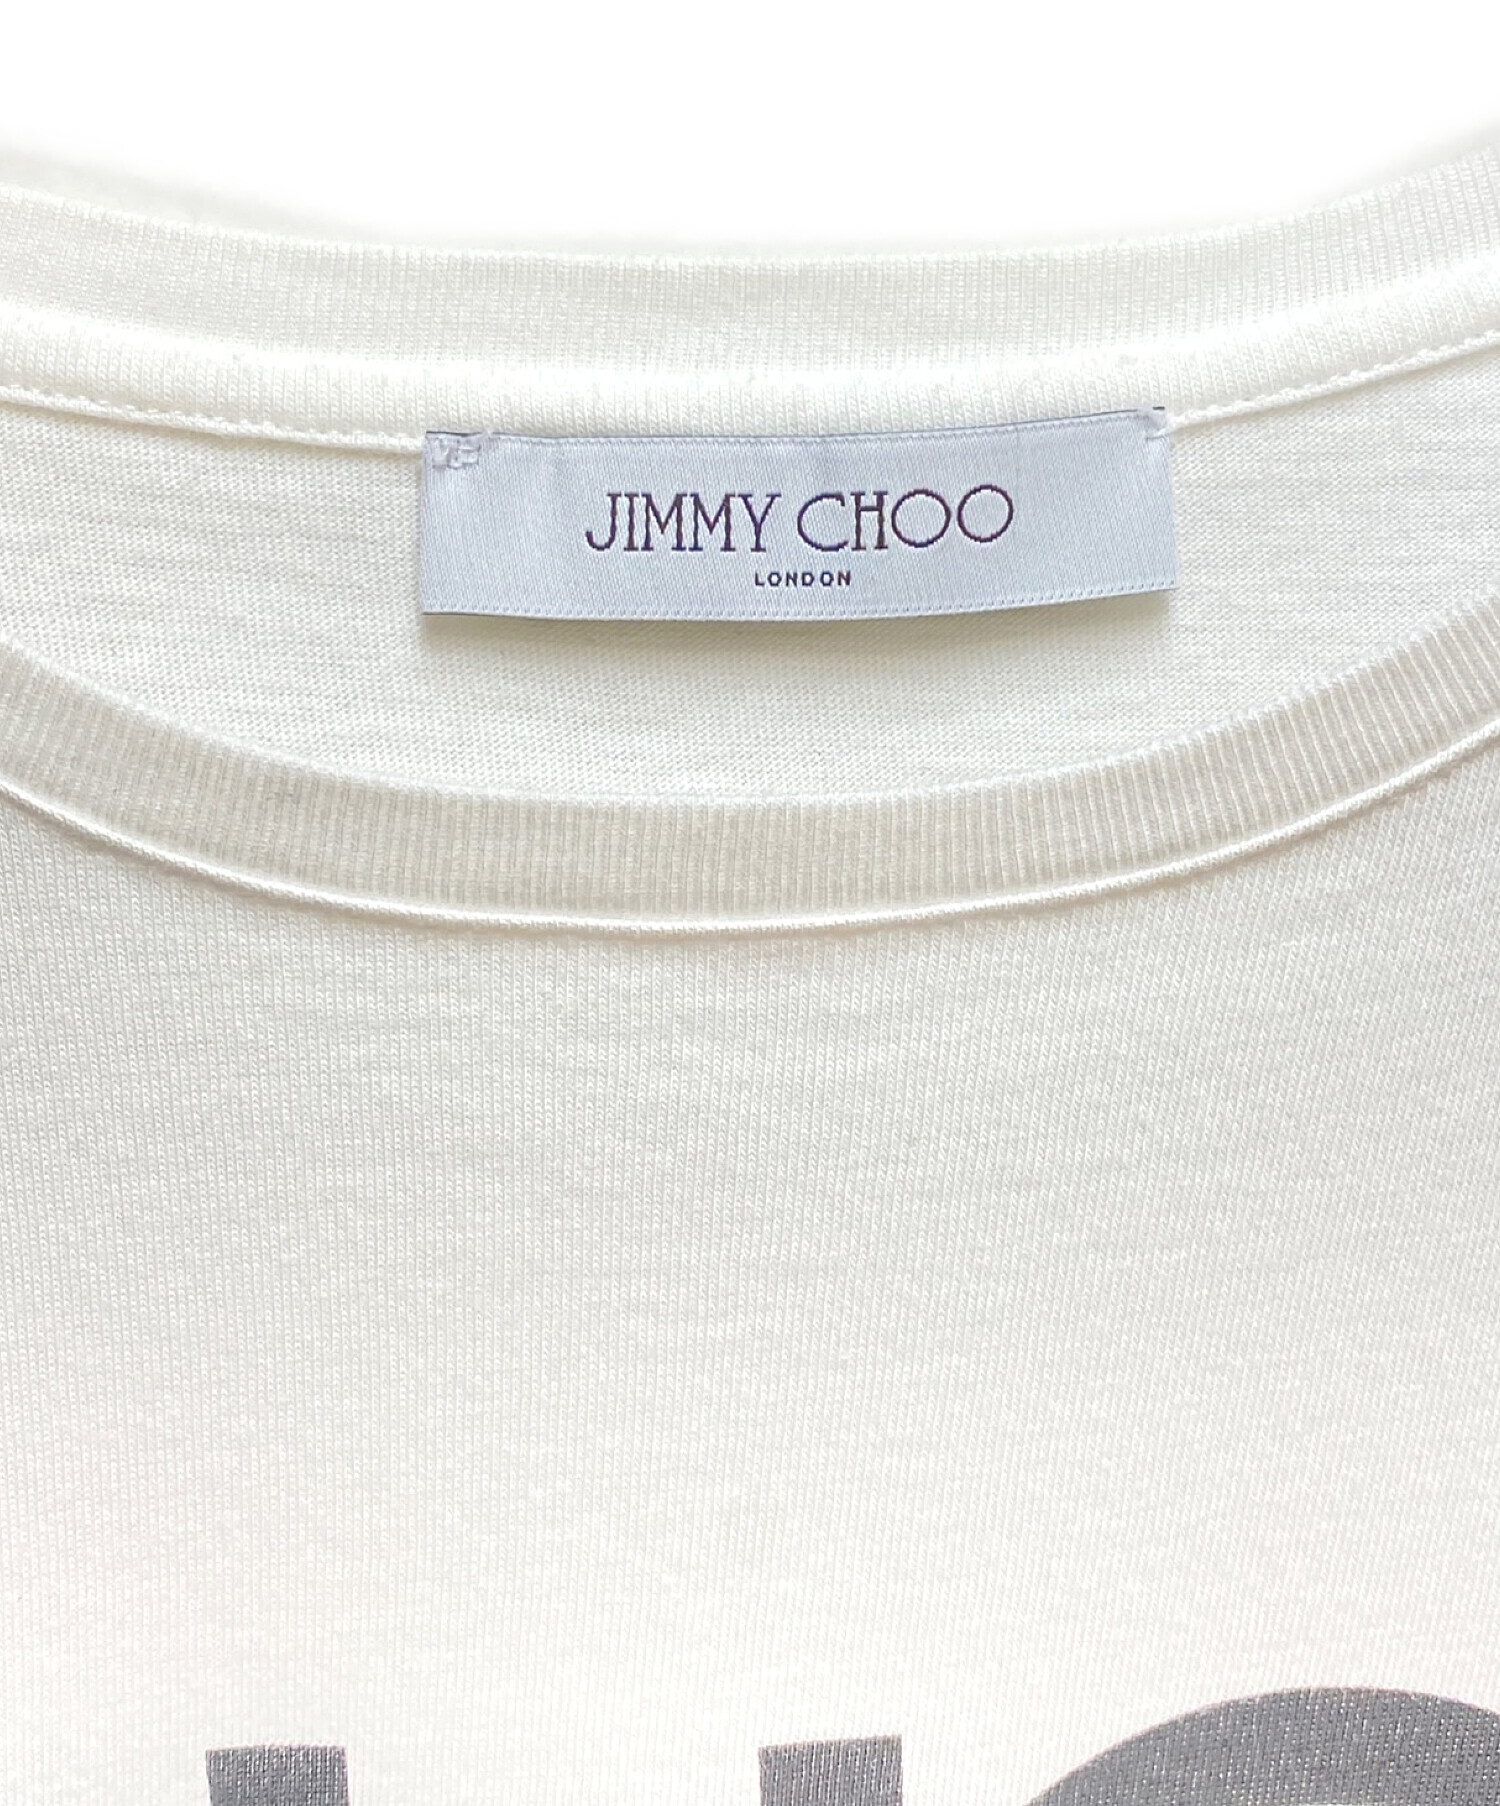 JIMMY CHOO (ジミーチュウ) ロゴTシャツ ホワイト サイズ:XS